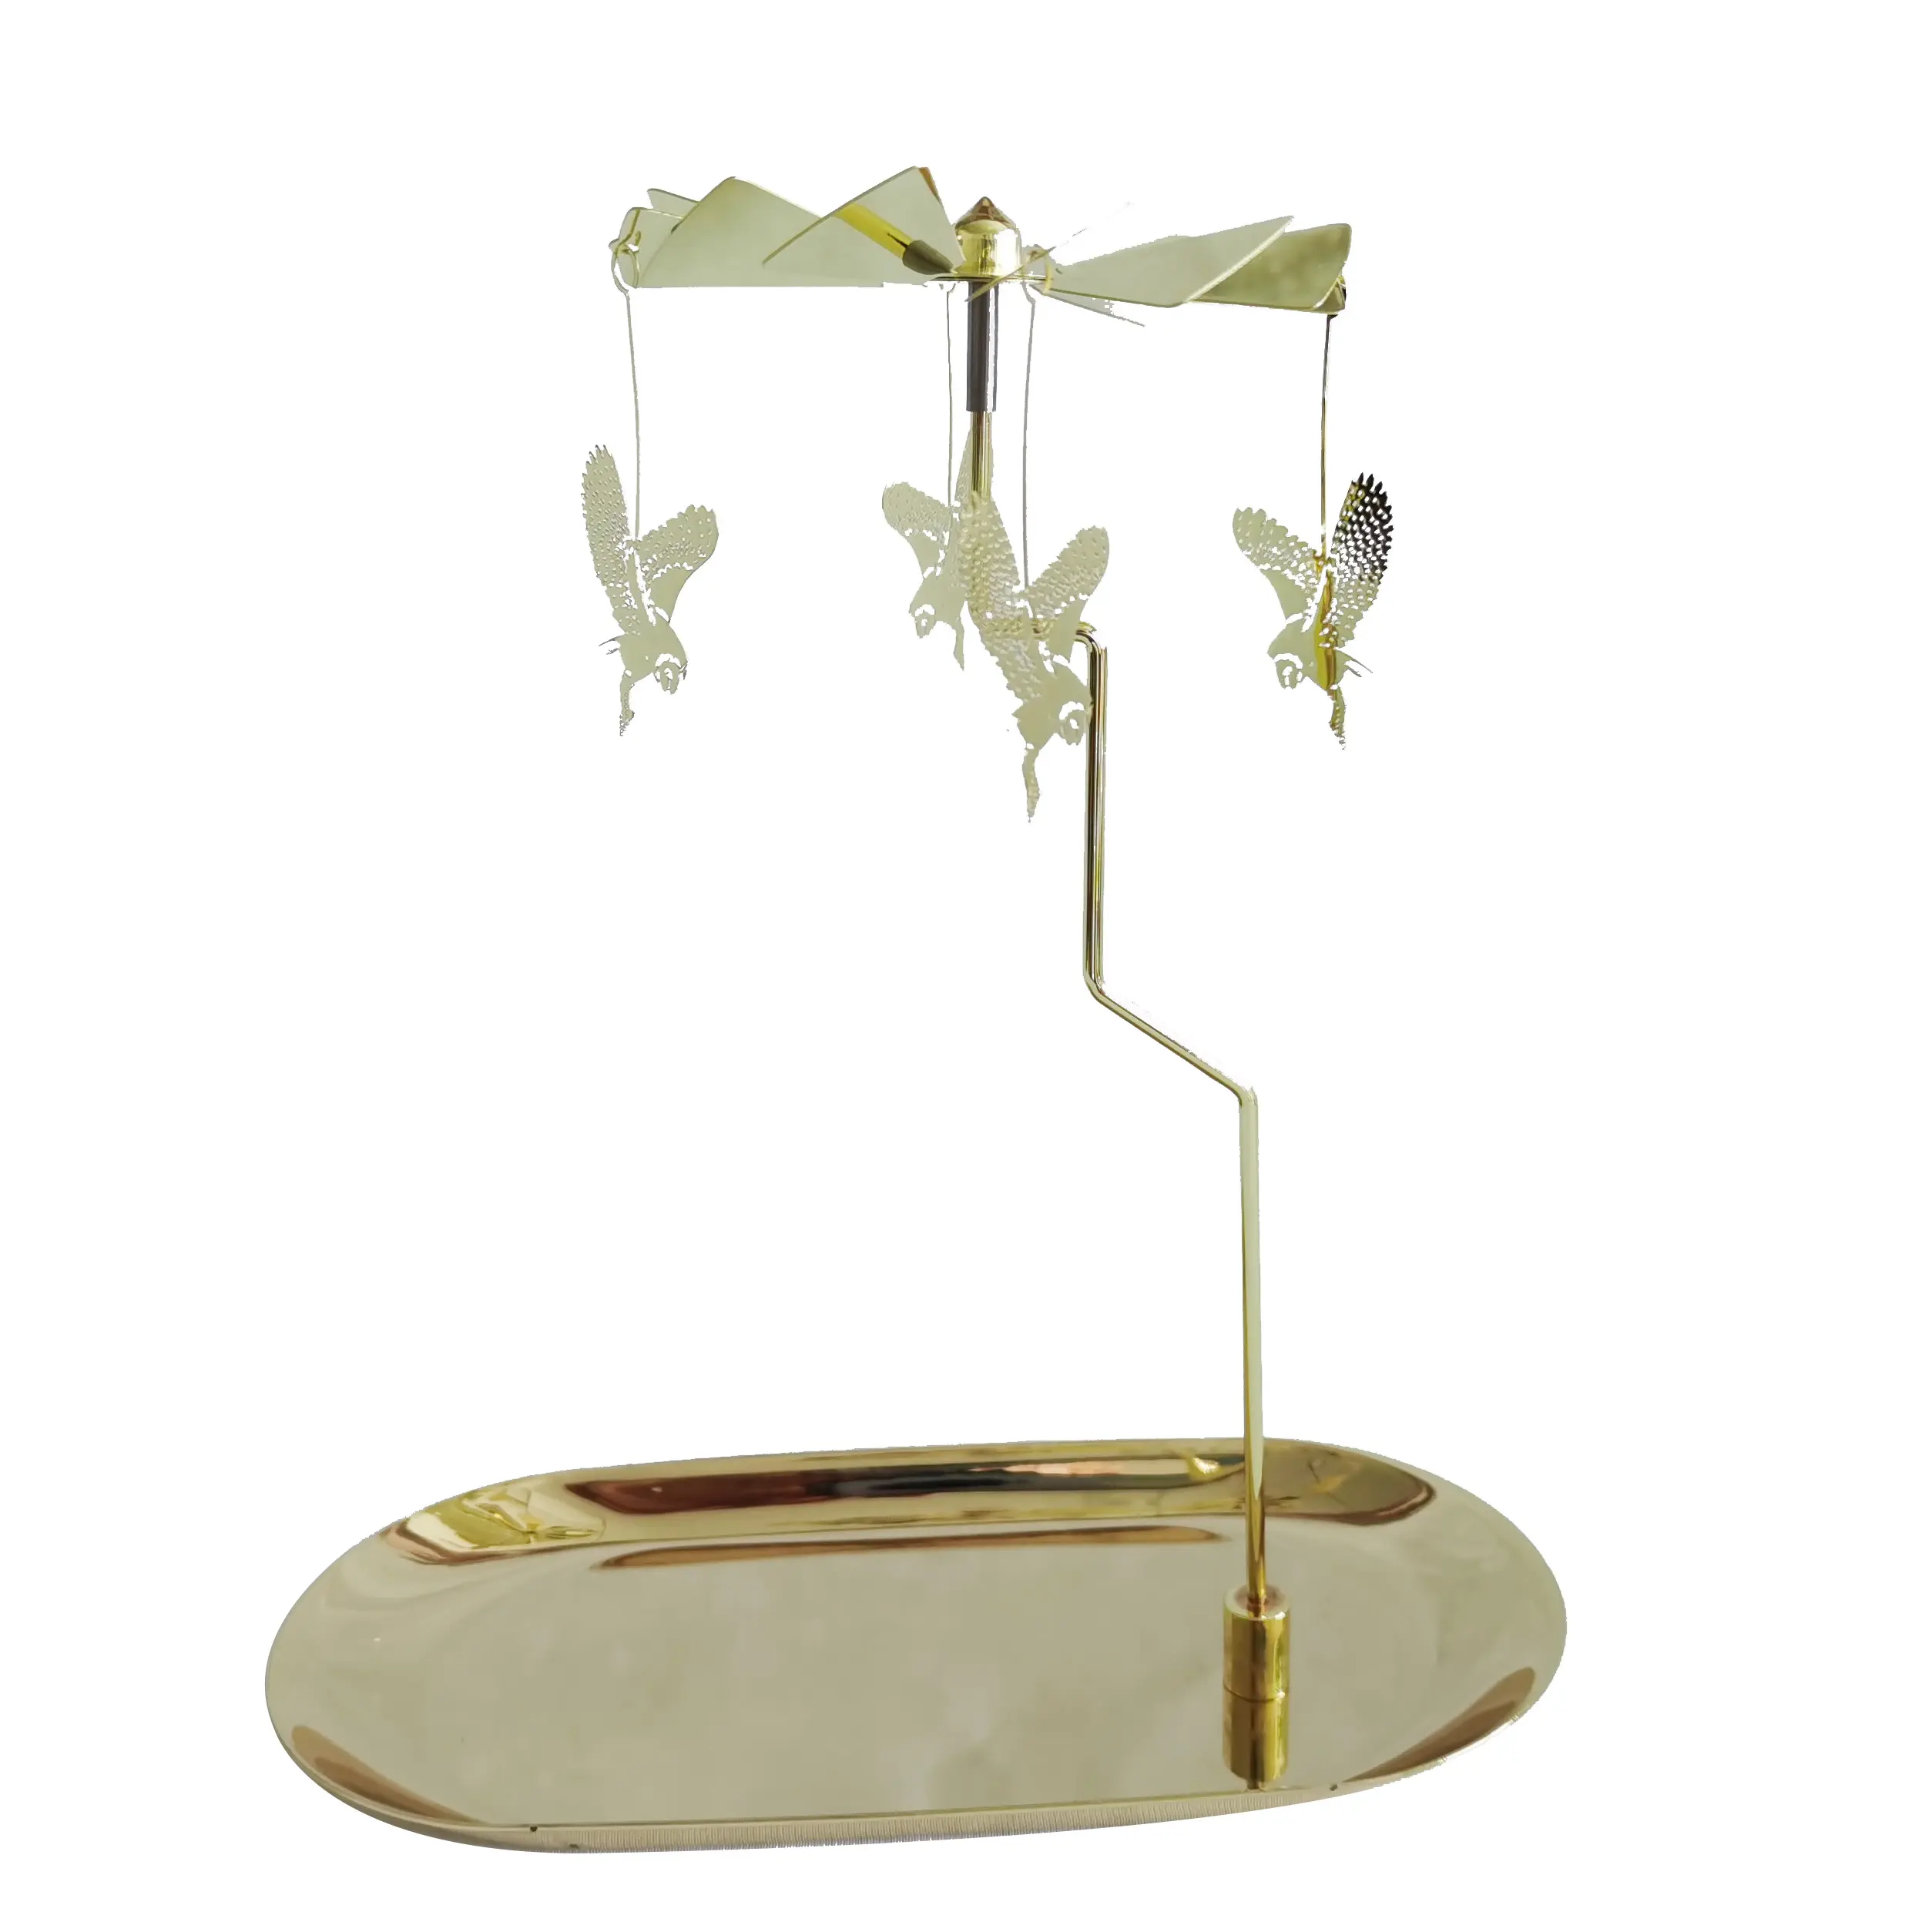 Vela giratoria de carrusel personalizada, candelabro giratorio de búho dorado, candelabro giratorio con bandeja de metal